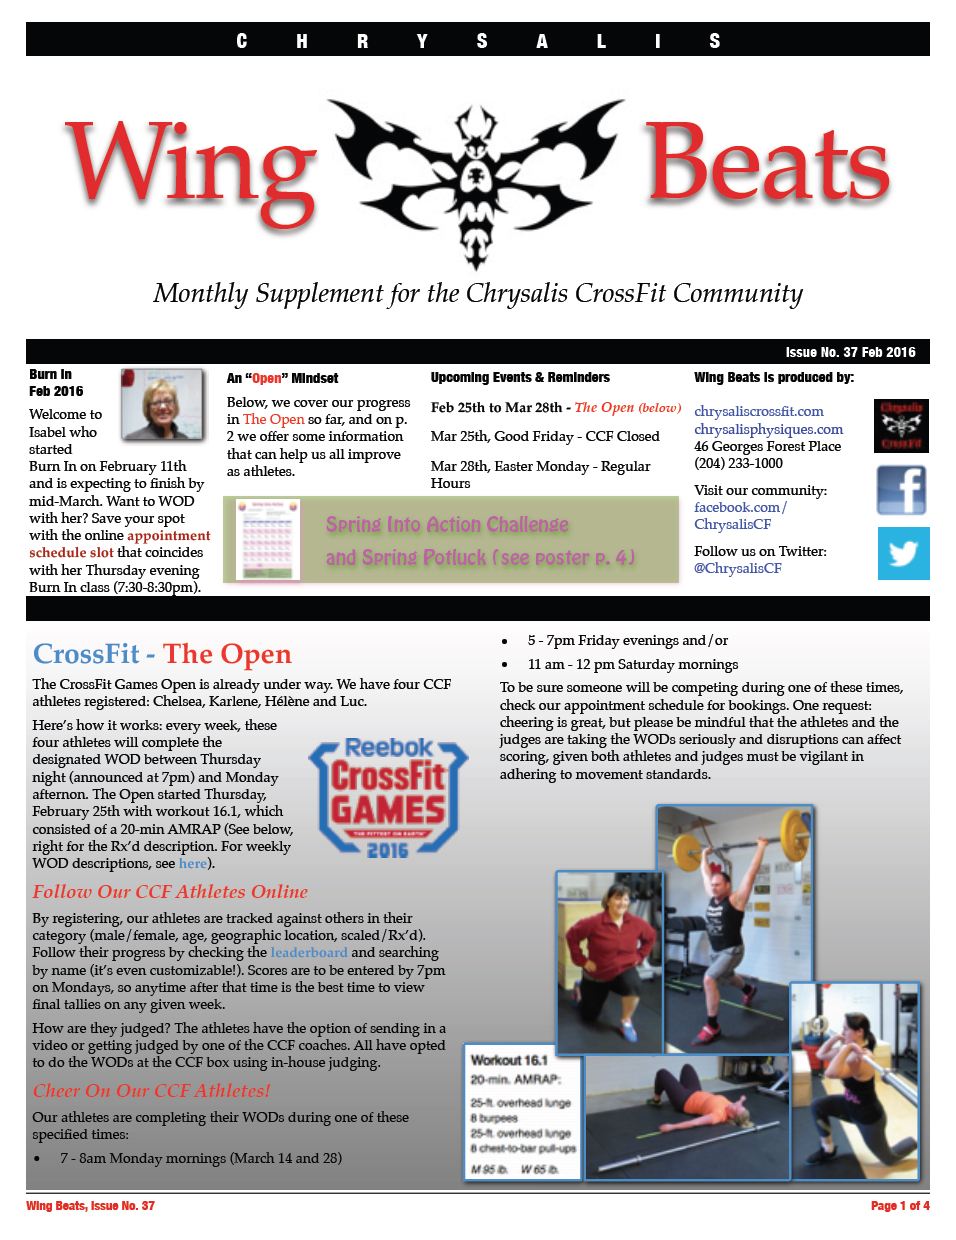 WingBeats Issue #37 - Feb 2016